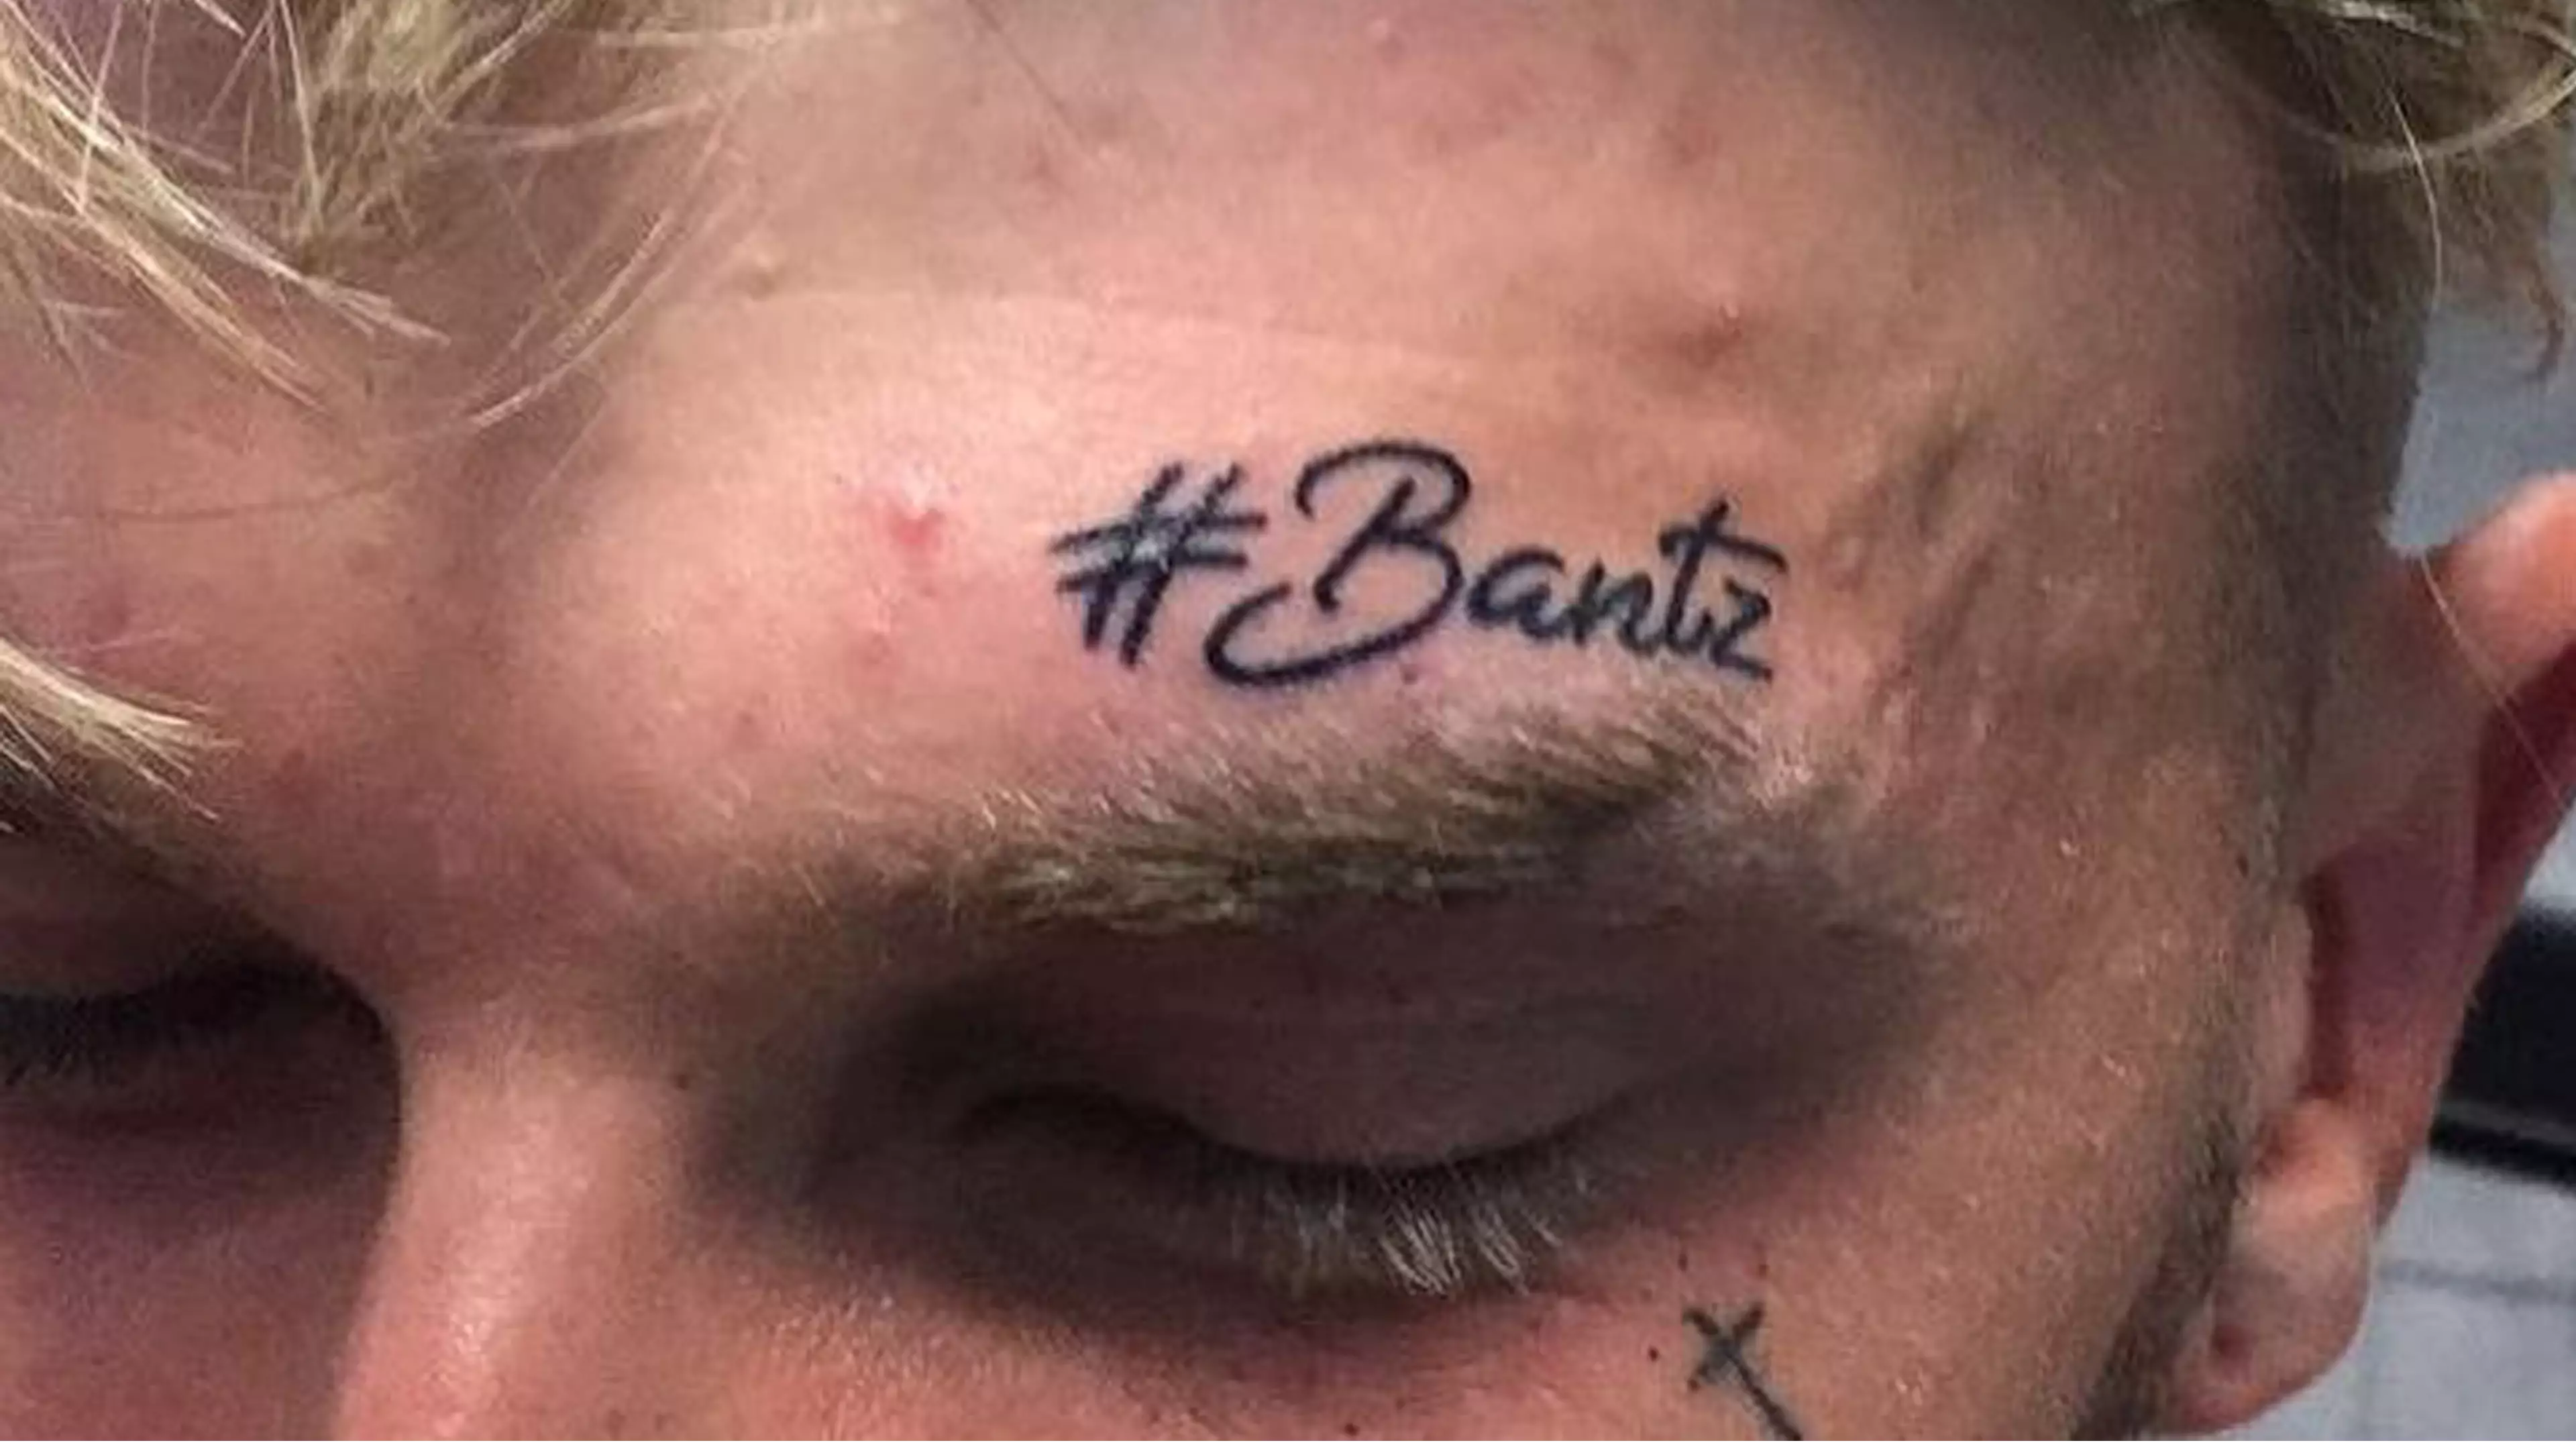 Man Who Got #Bantz Tattoo While Drunk Has No Regrets 